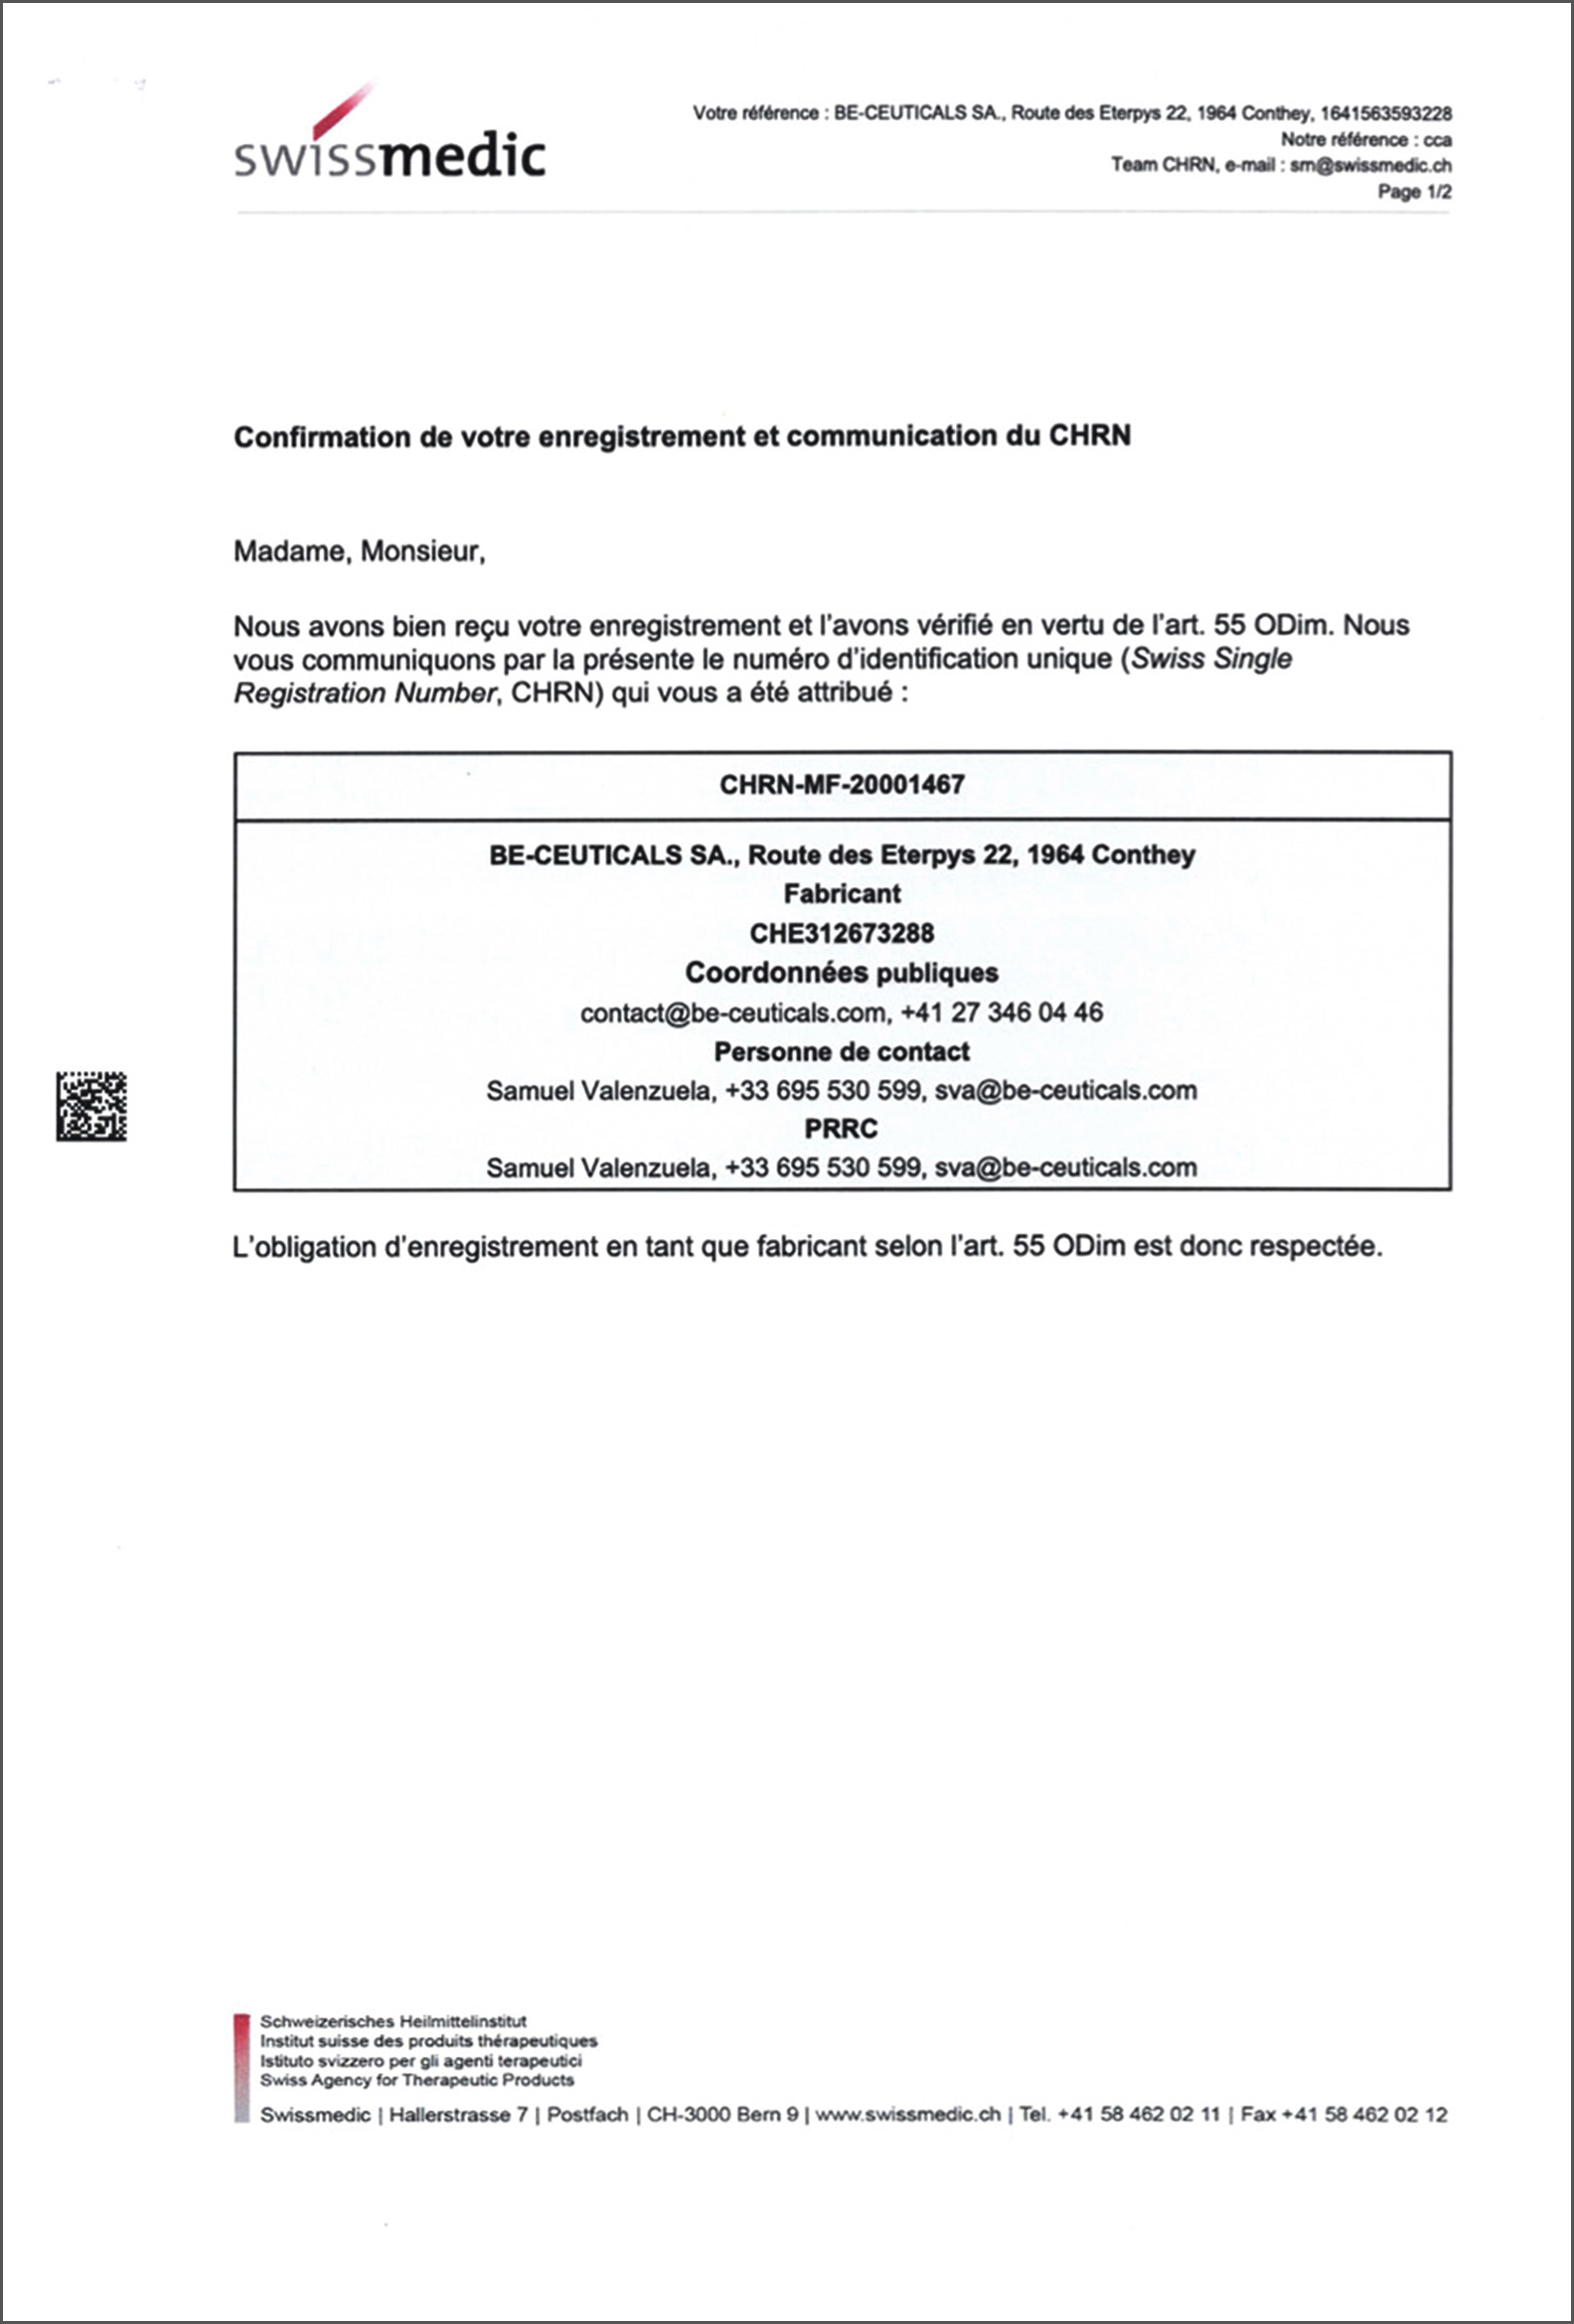 Swissmedic - Swiss Single Registration Number (CHRN)